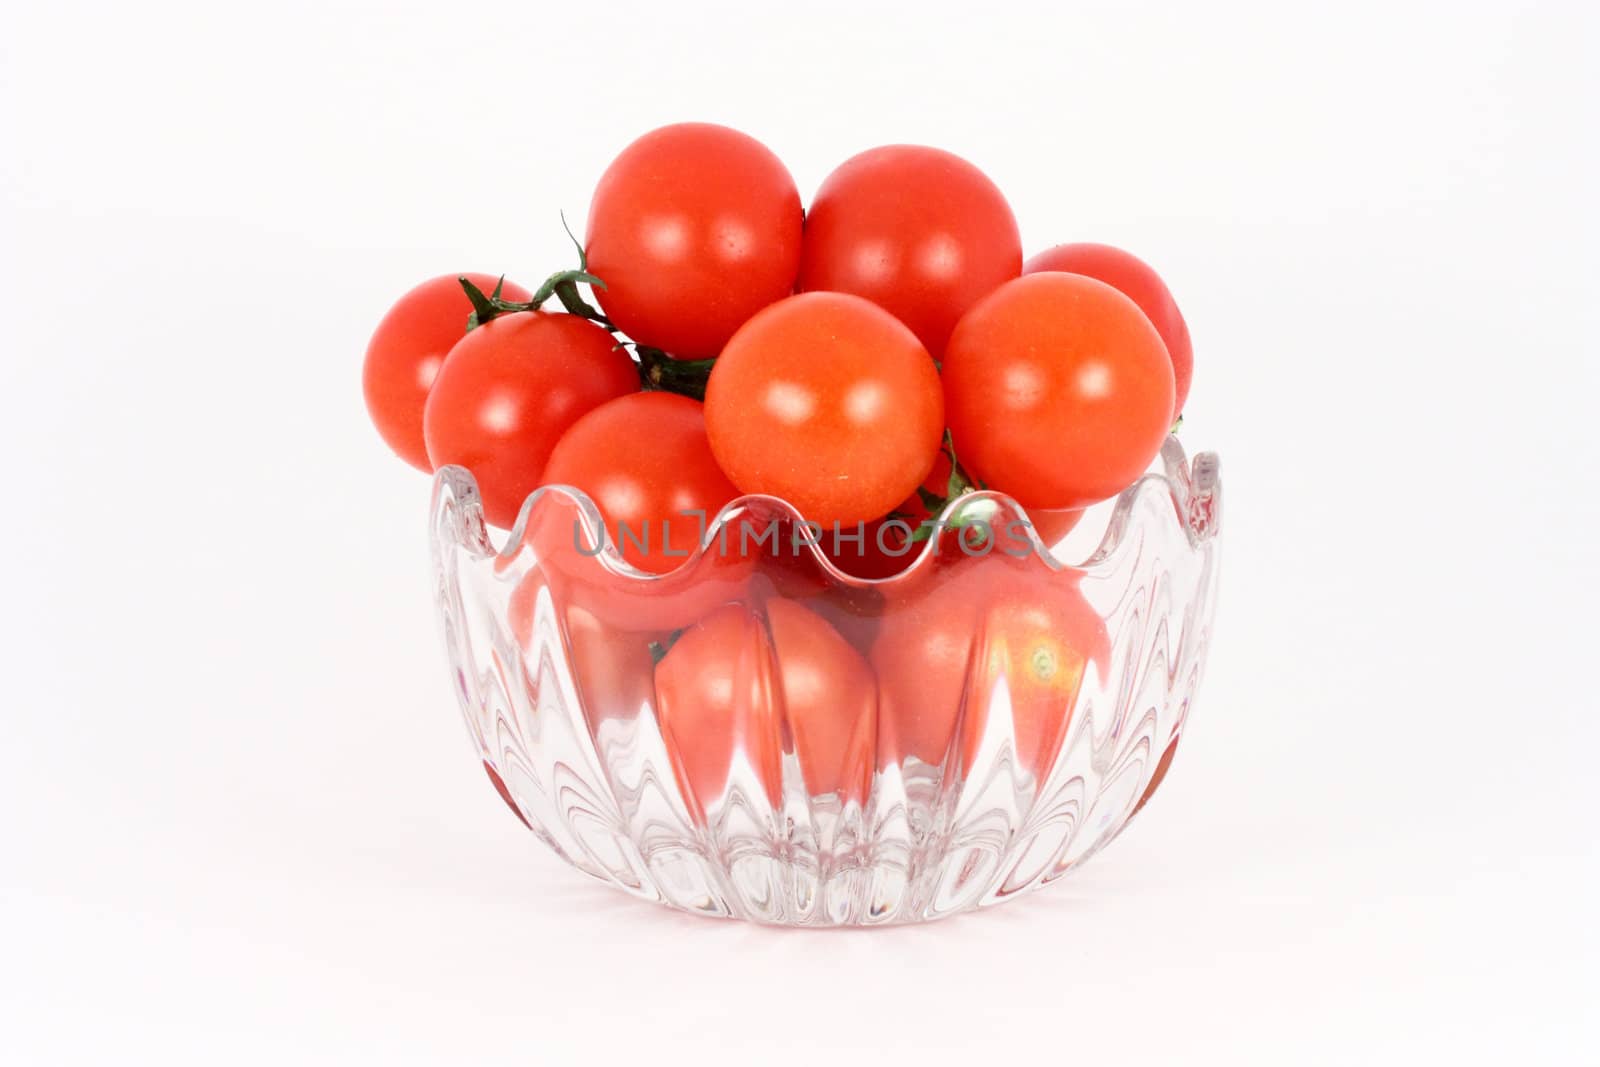 Cherry tomato in glass bowl by Boris15